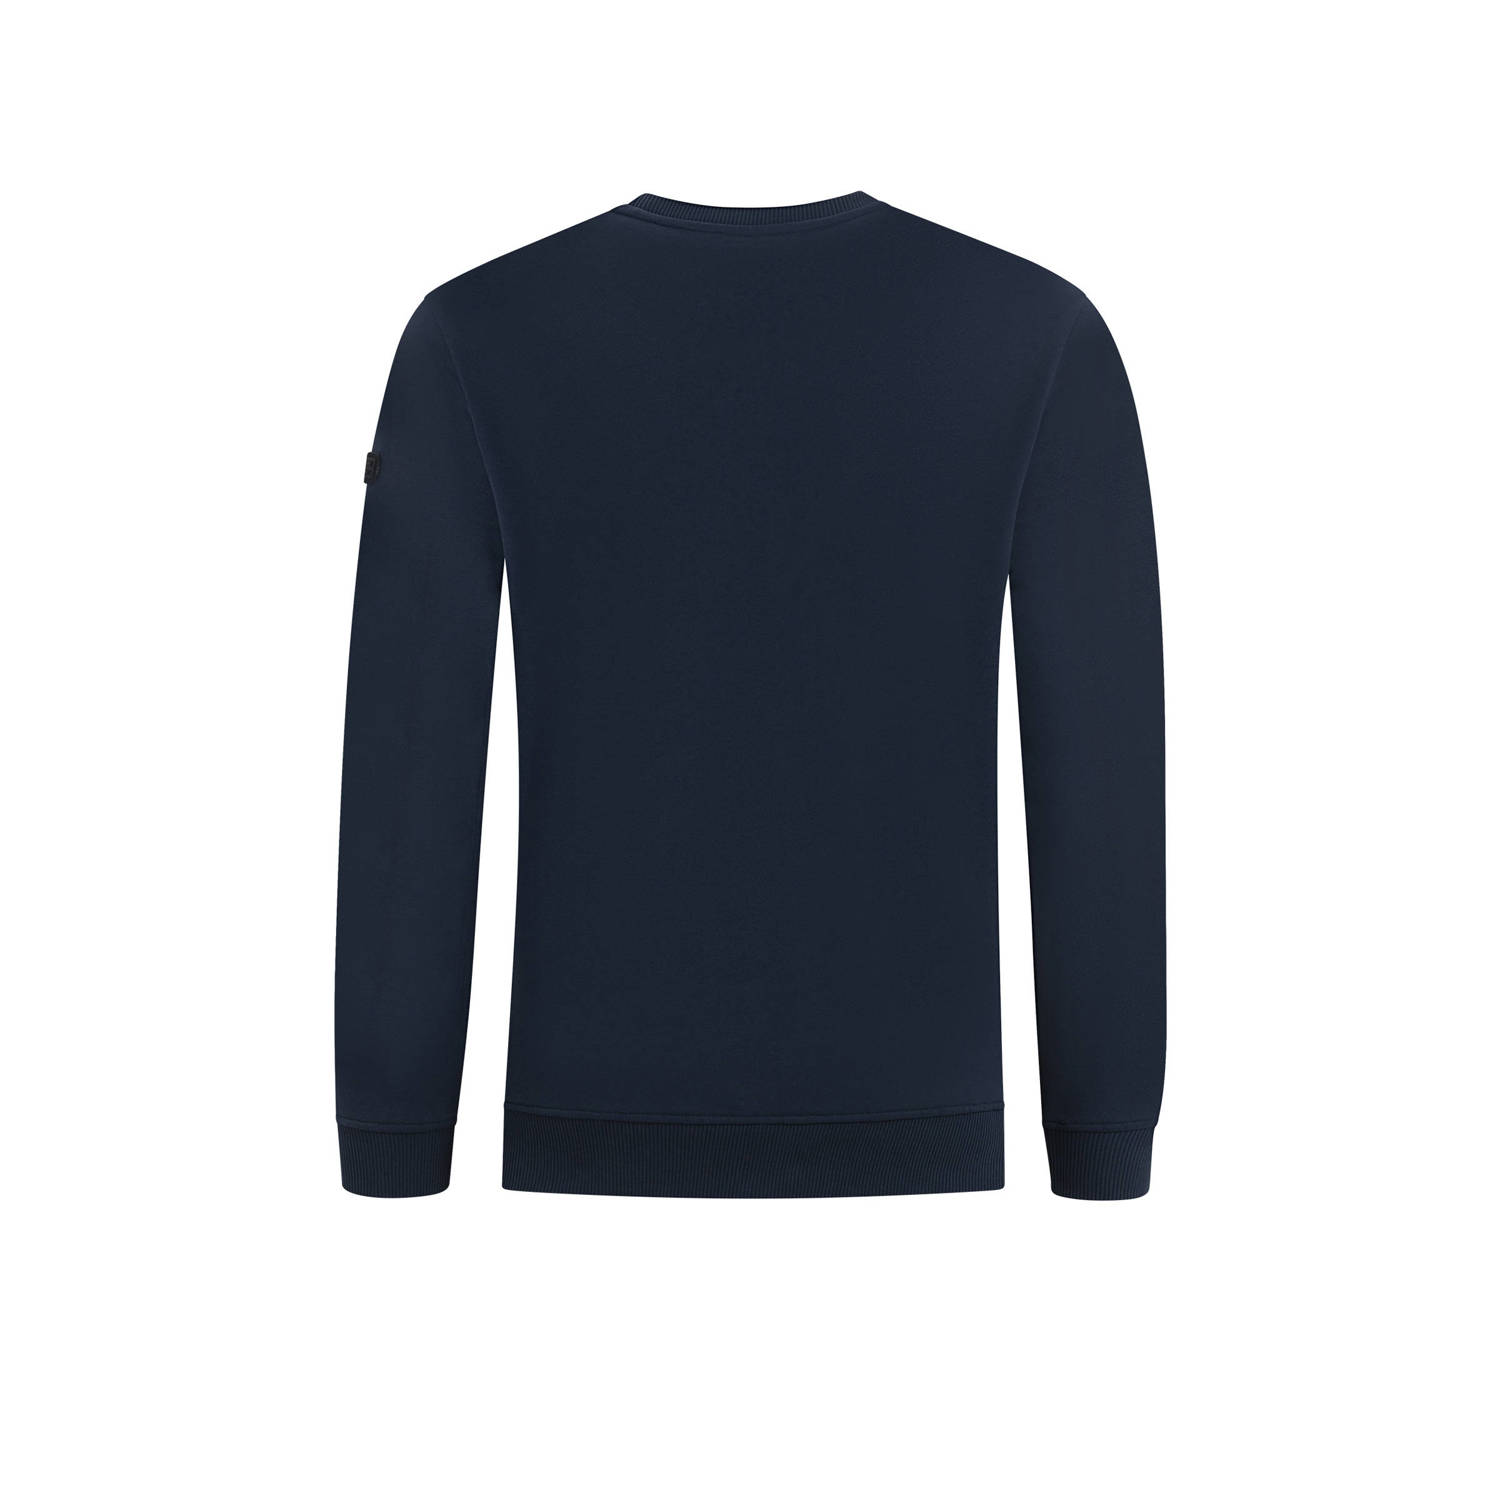 Ballin sweater met printopdruk donkerblauw